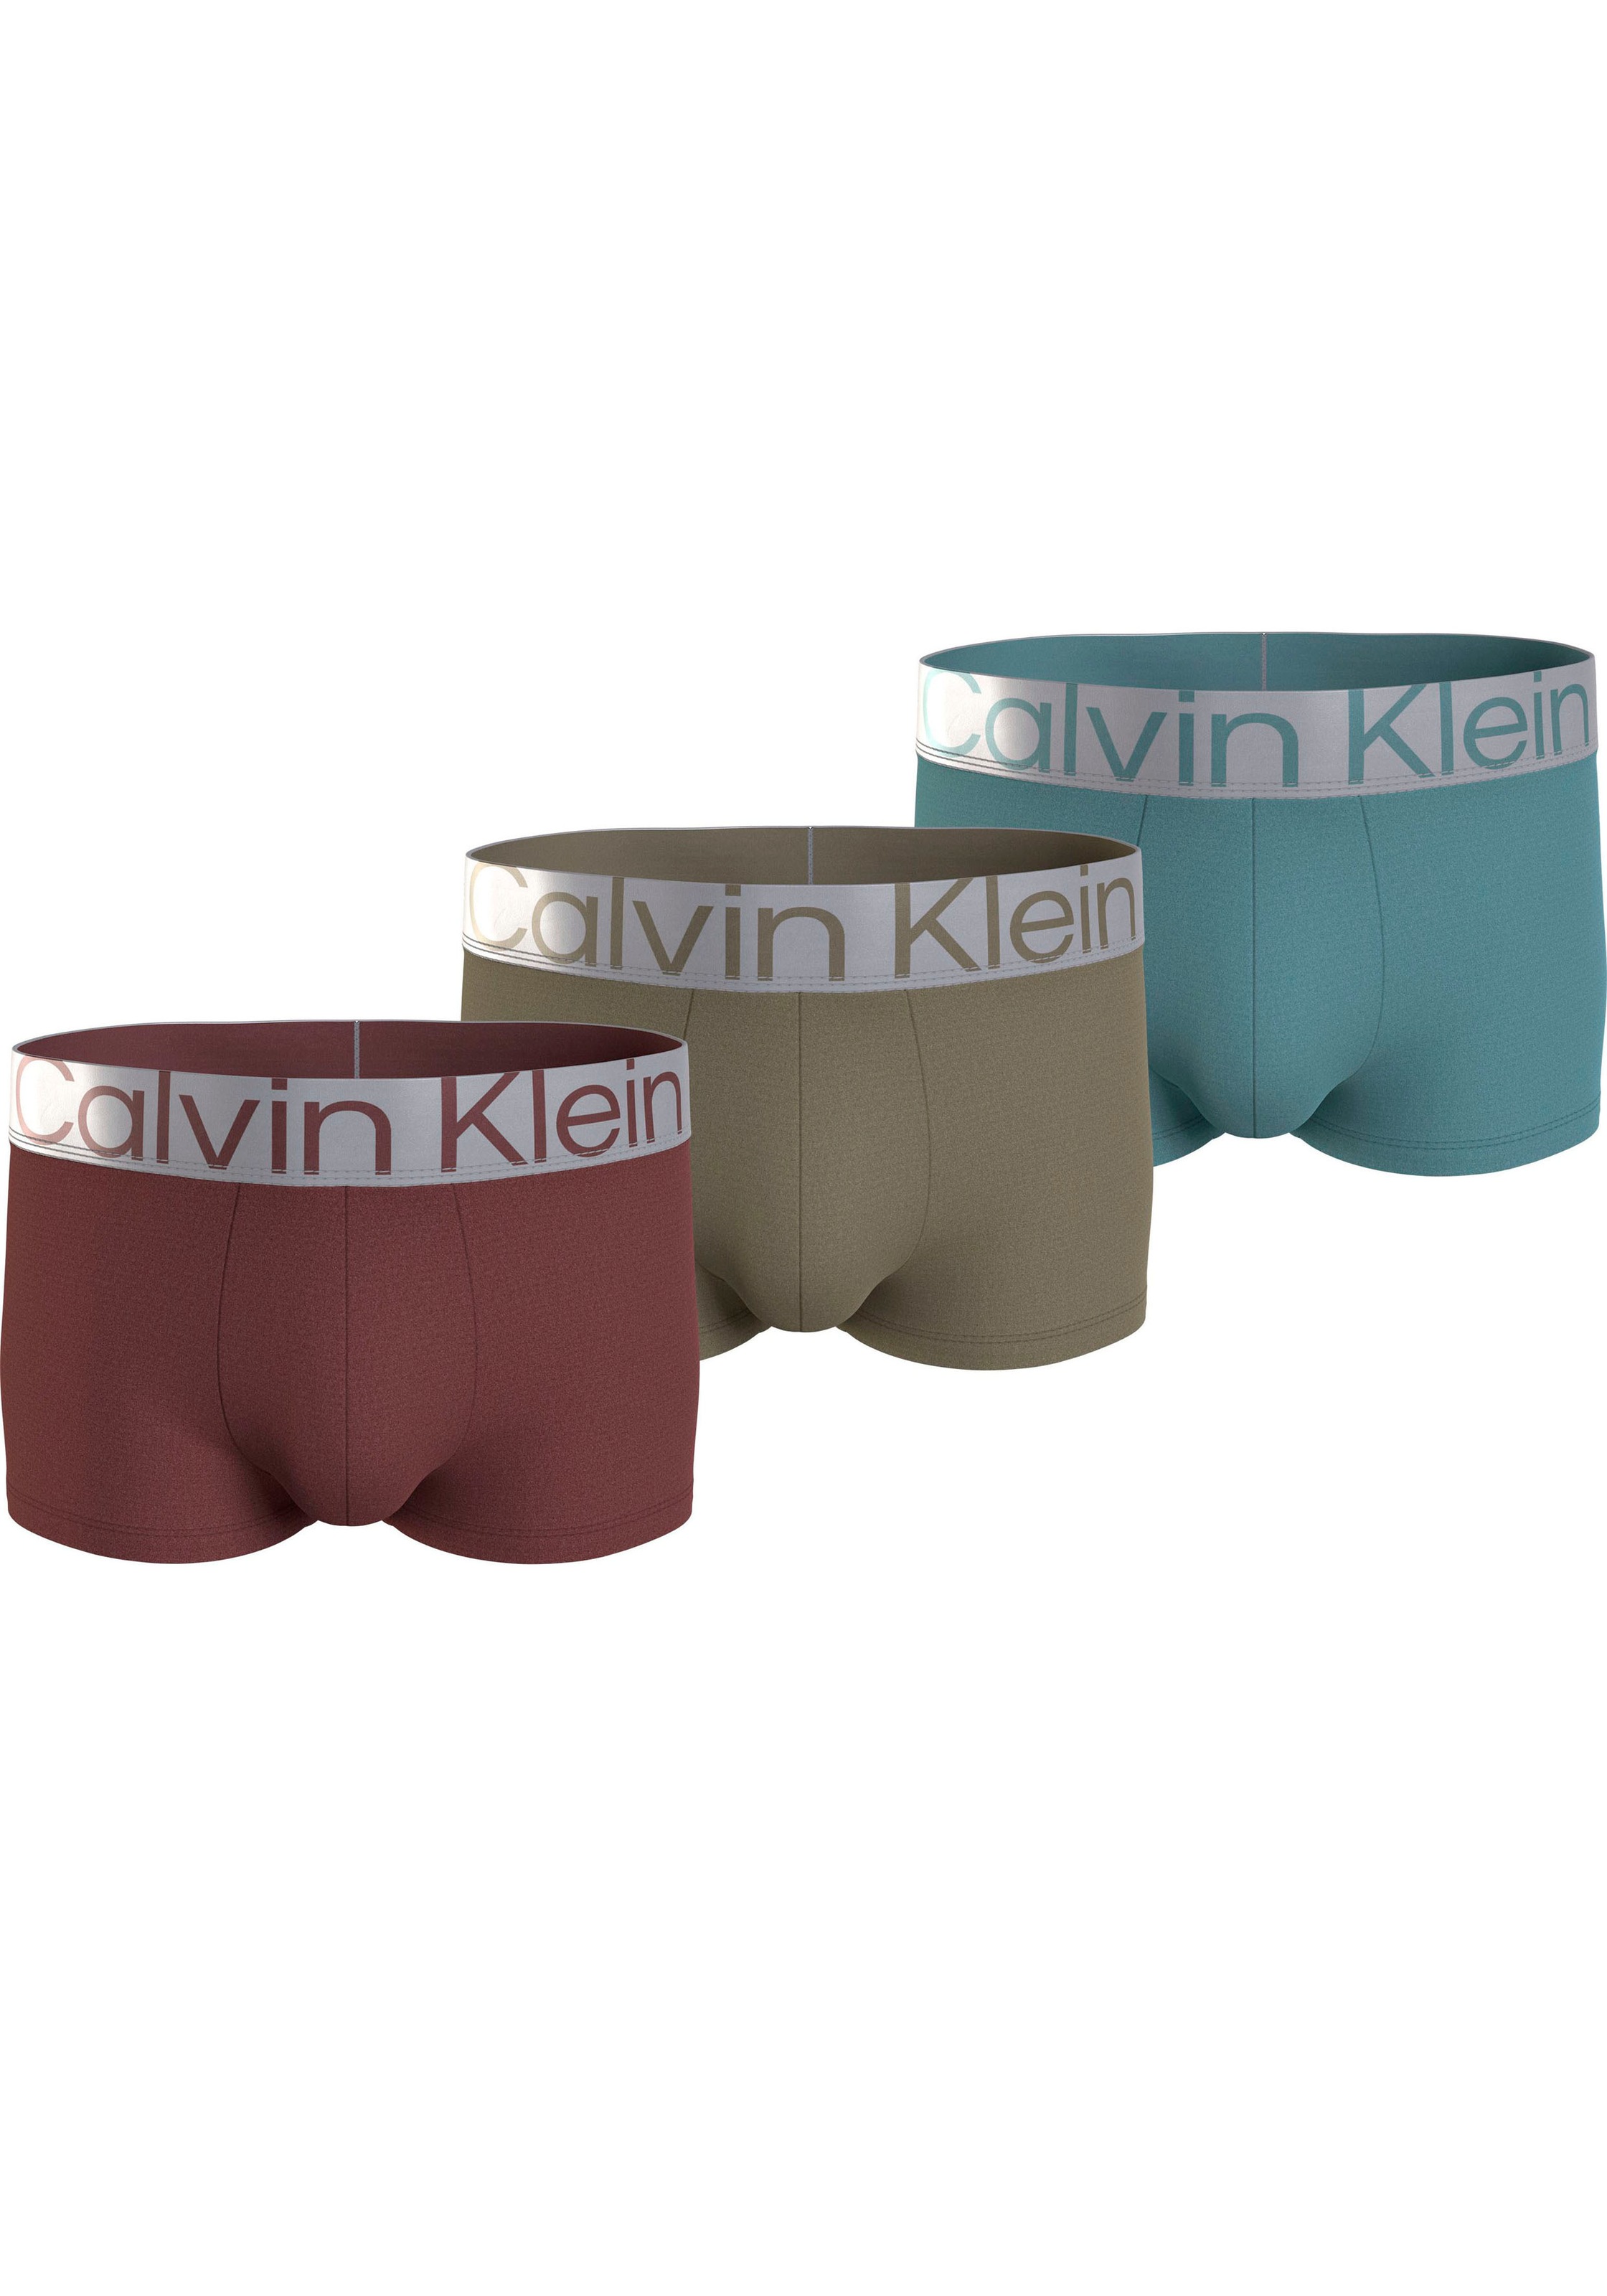 Calvin Klein Underwear Calvin KLEIN TRUNK »LOW RISE TRUNK 3PK...